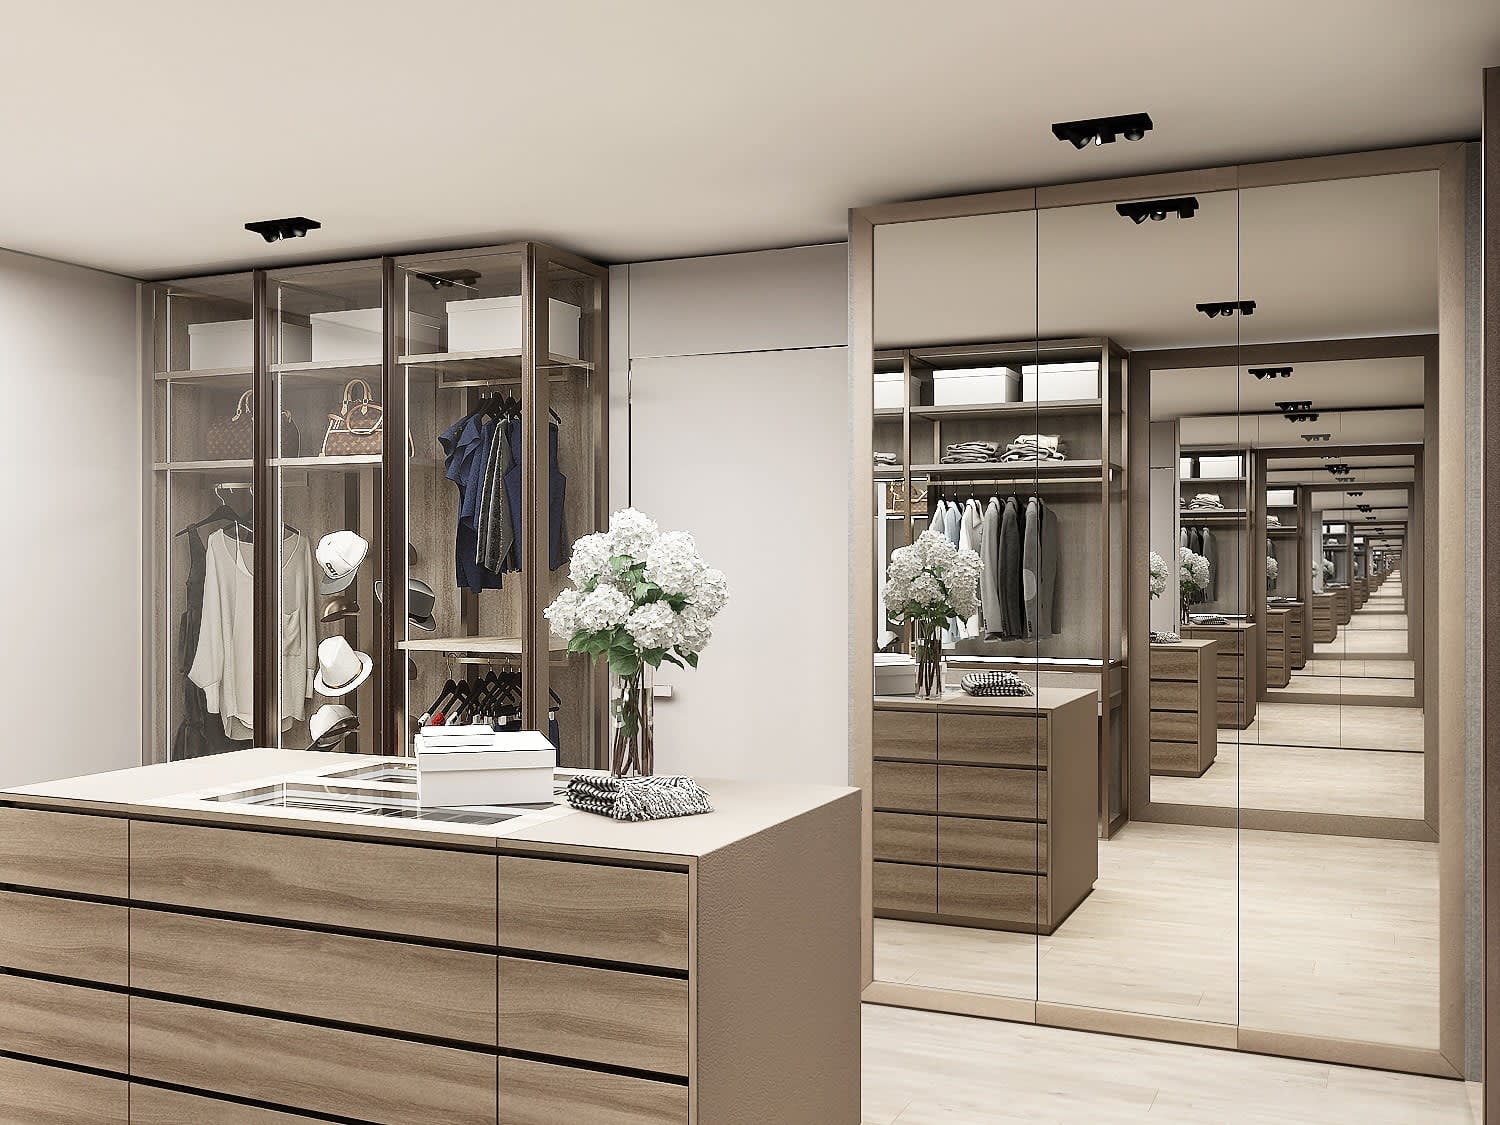 New Brand Alert! Place Vendôme! 💍 - The Luxury Closet